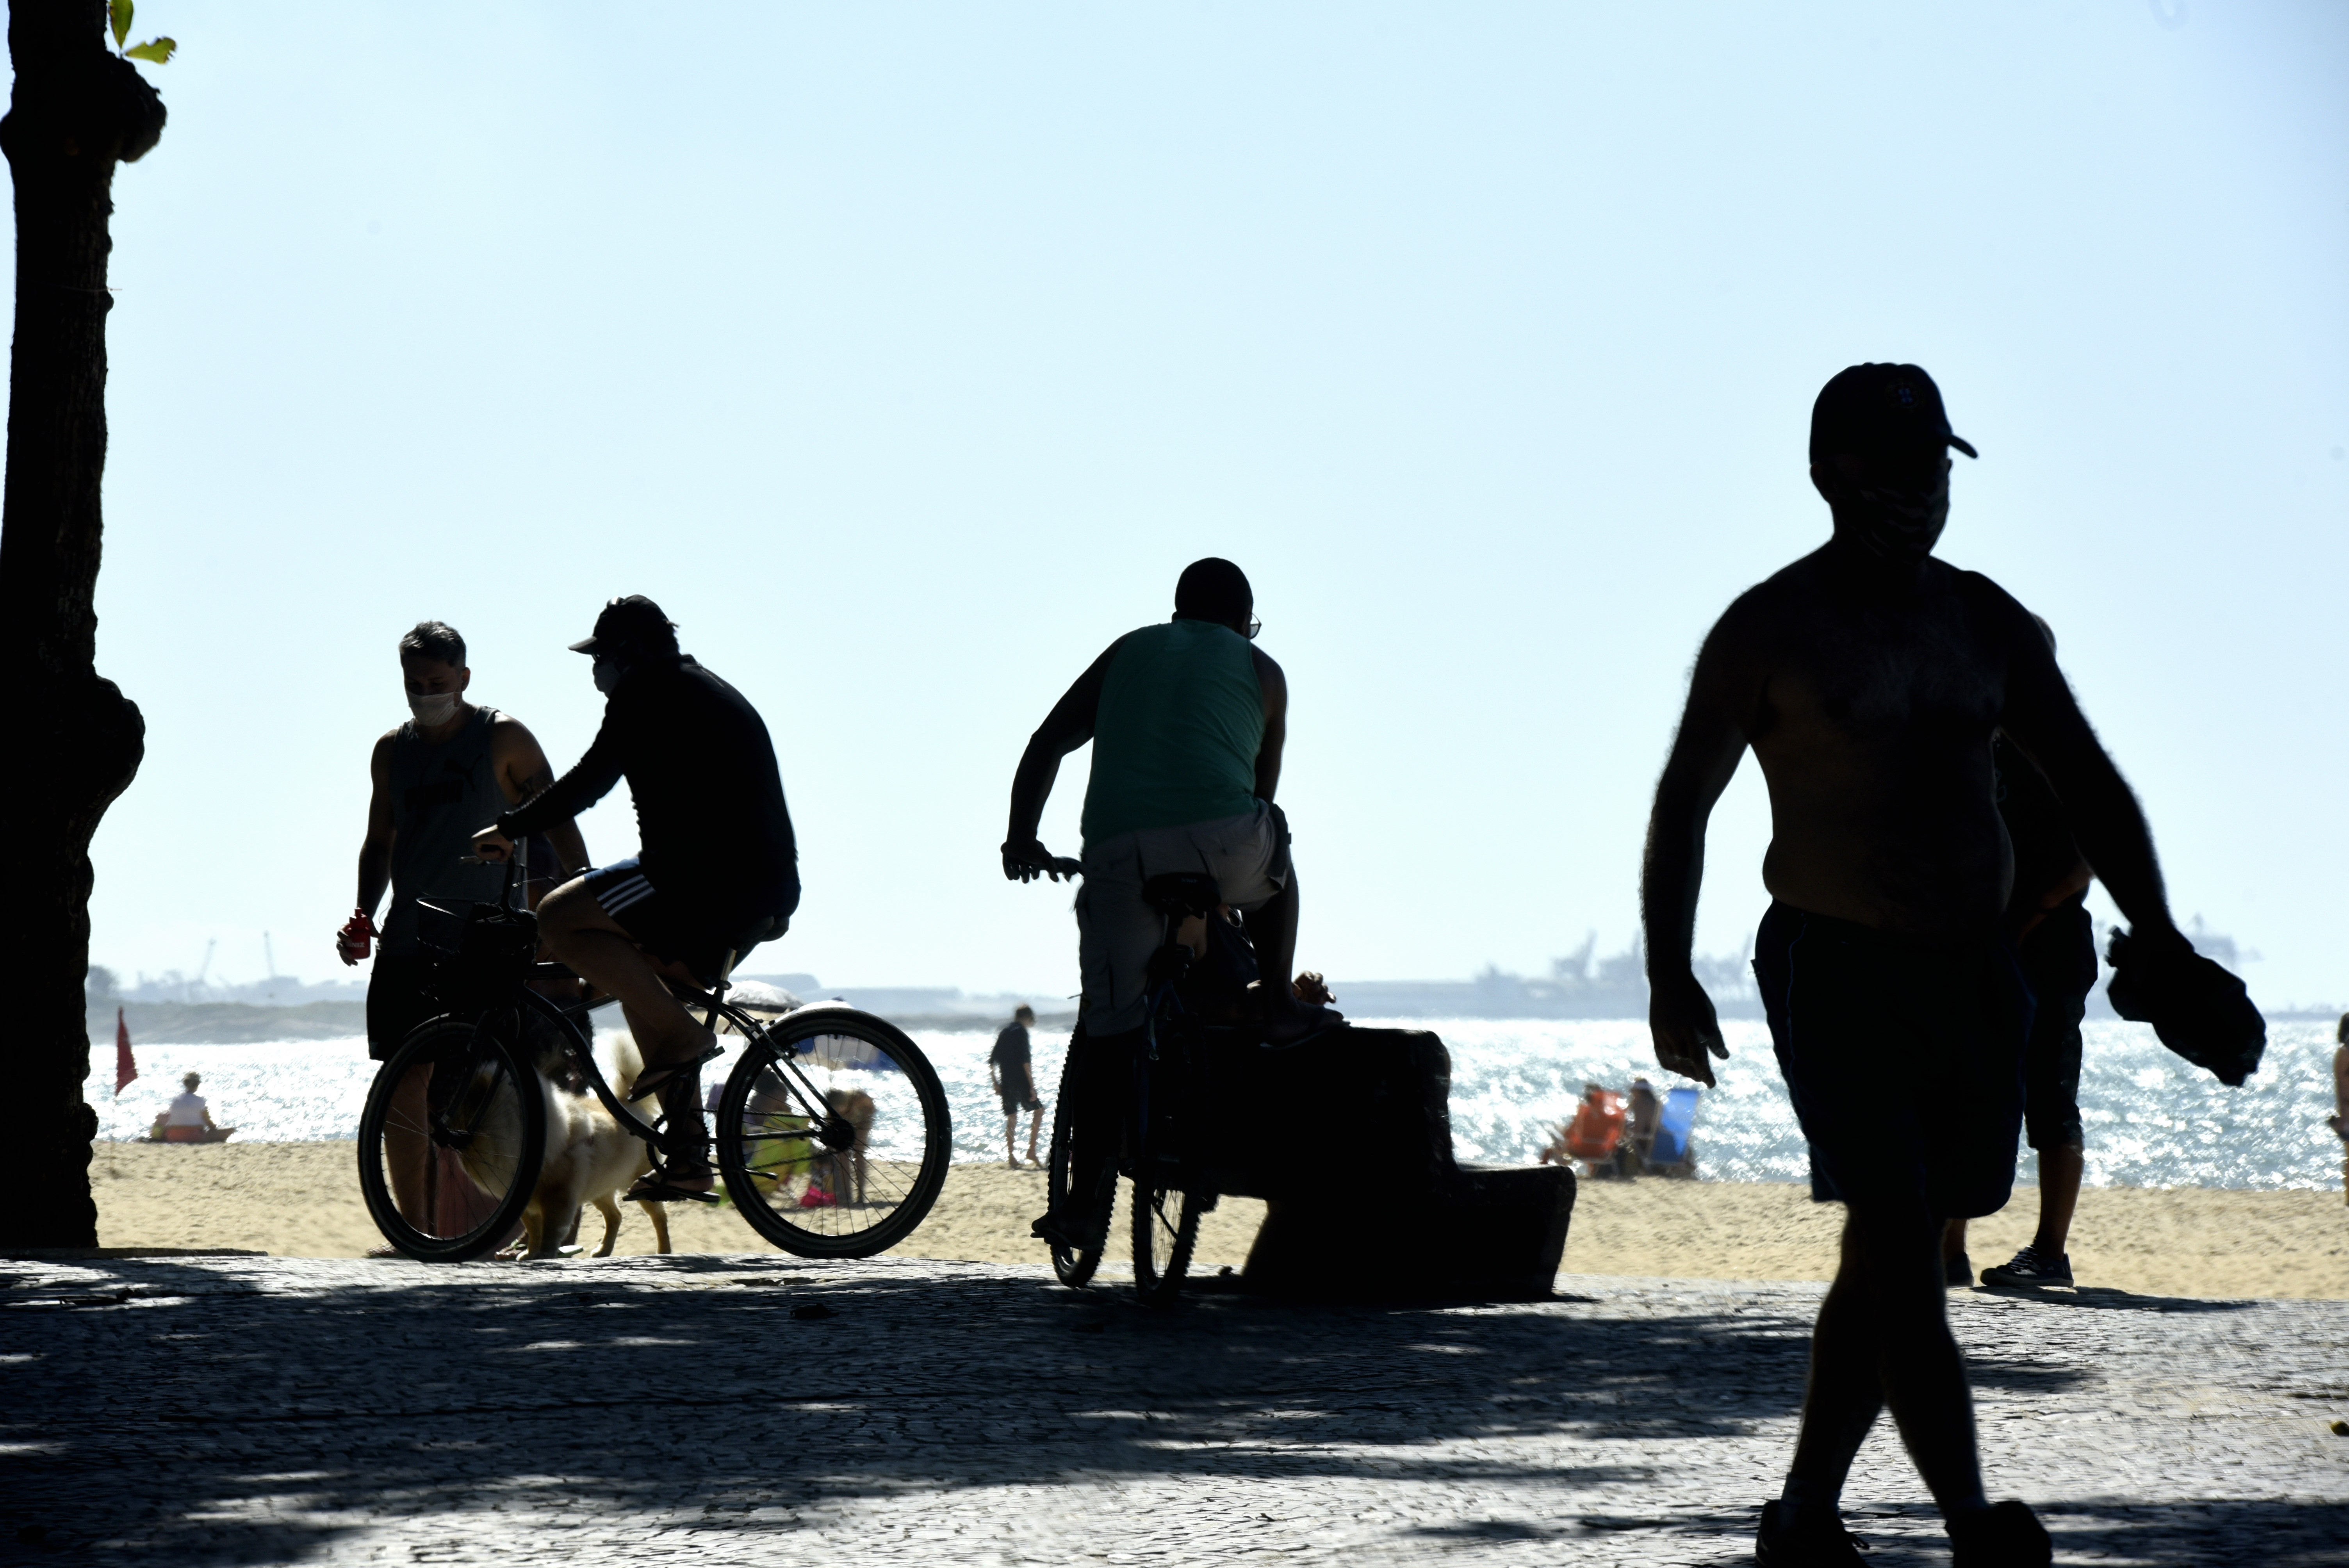 Movimento de pessoas durante a pandemia de Coronavírus na Praia de Itapoã, Vila Velha